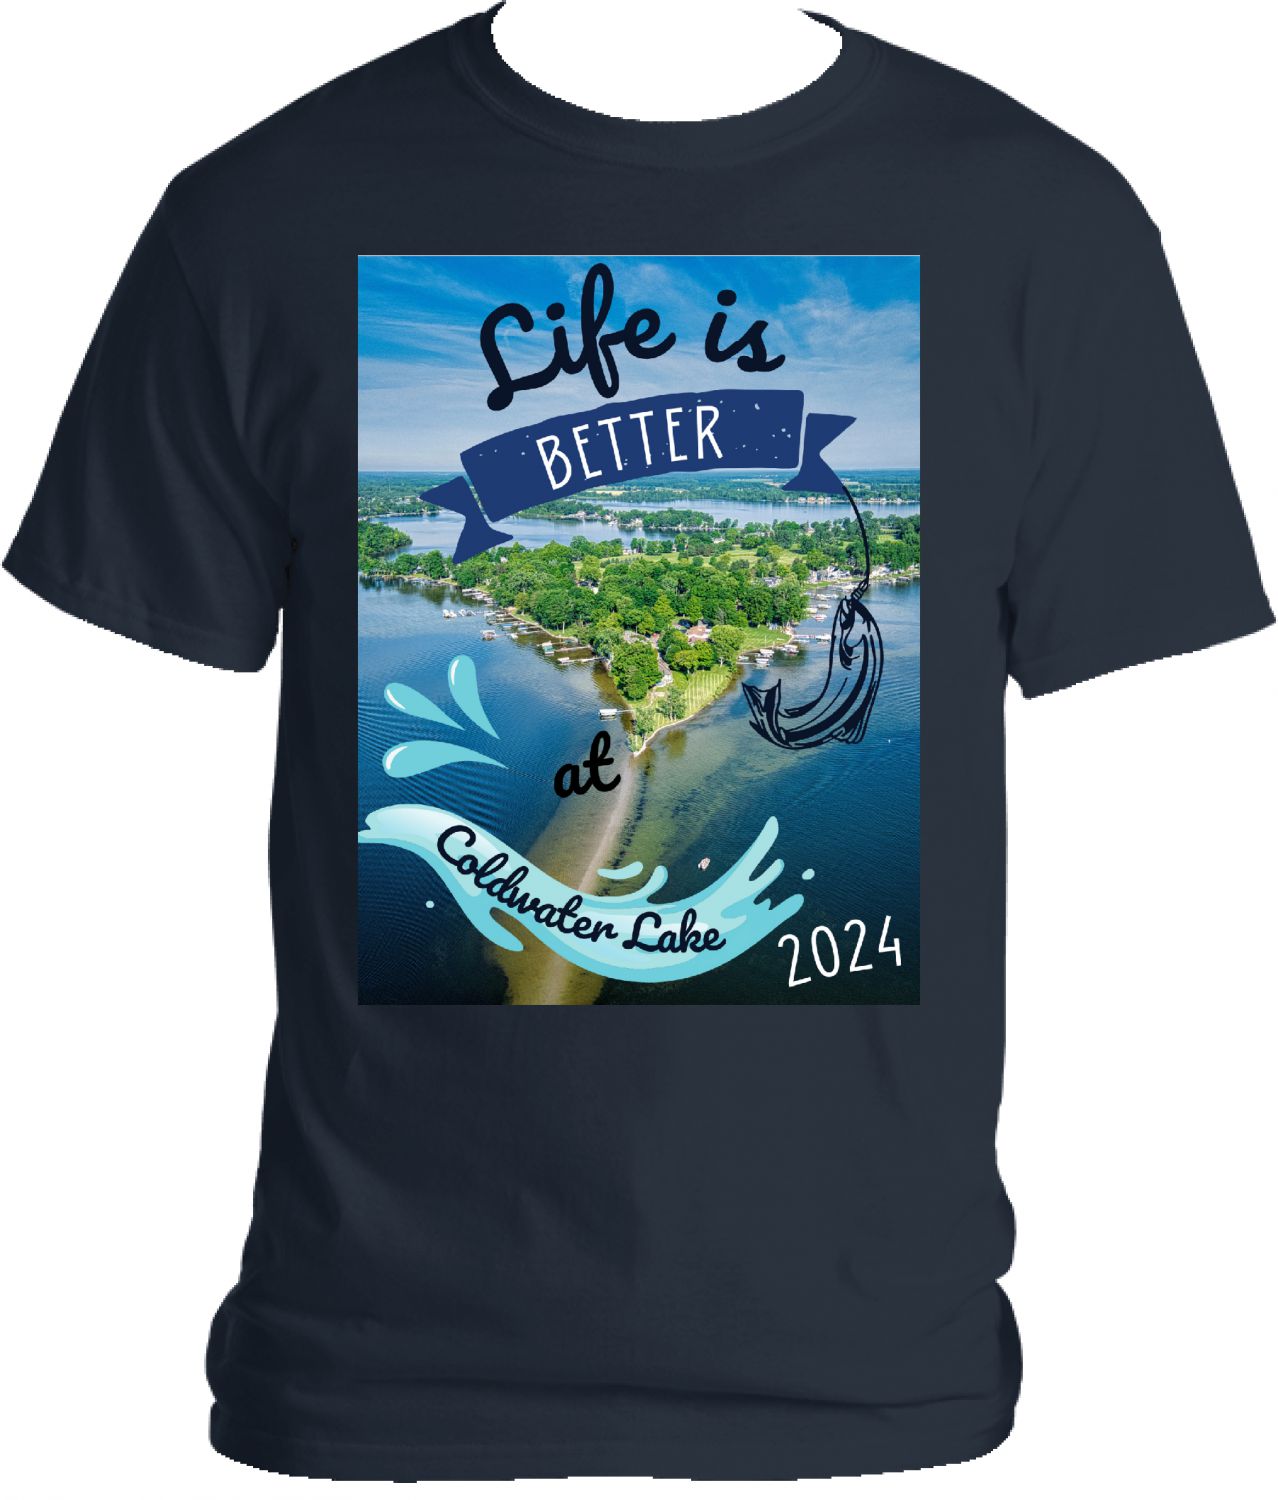 Coldwater Lake T-Shirt 2024